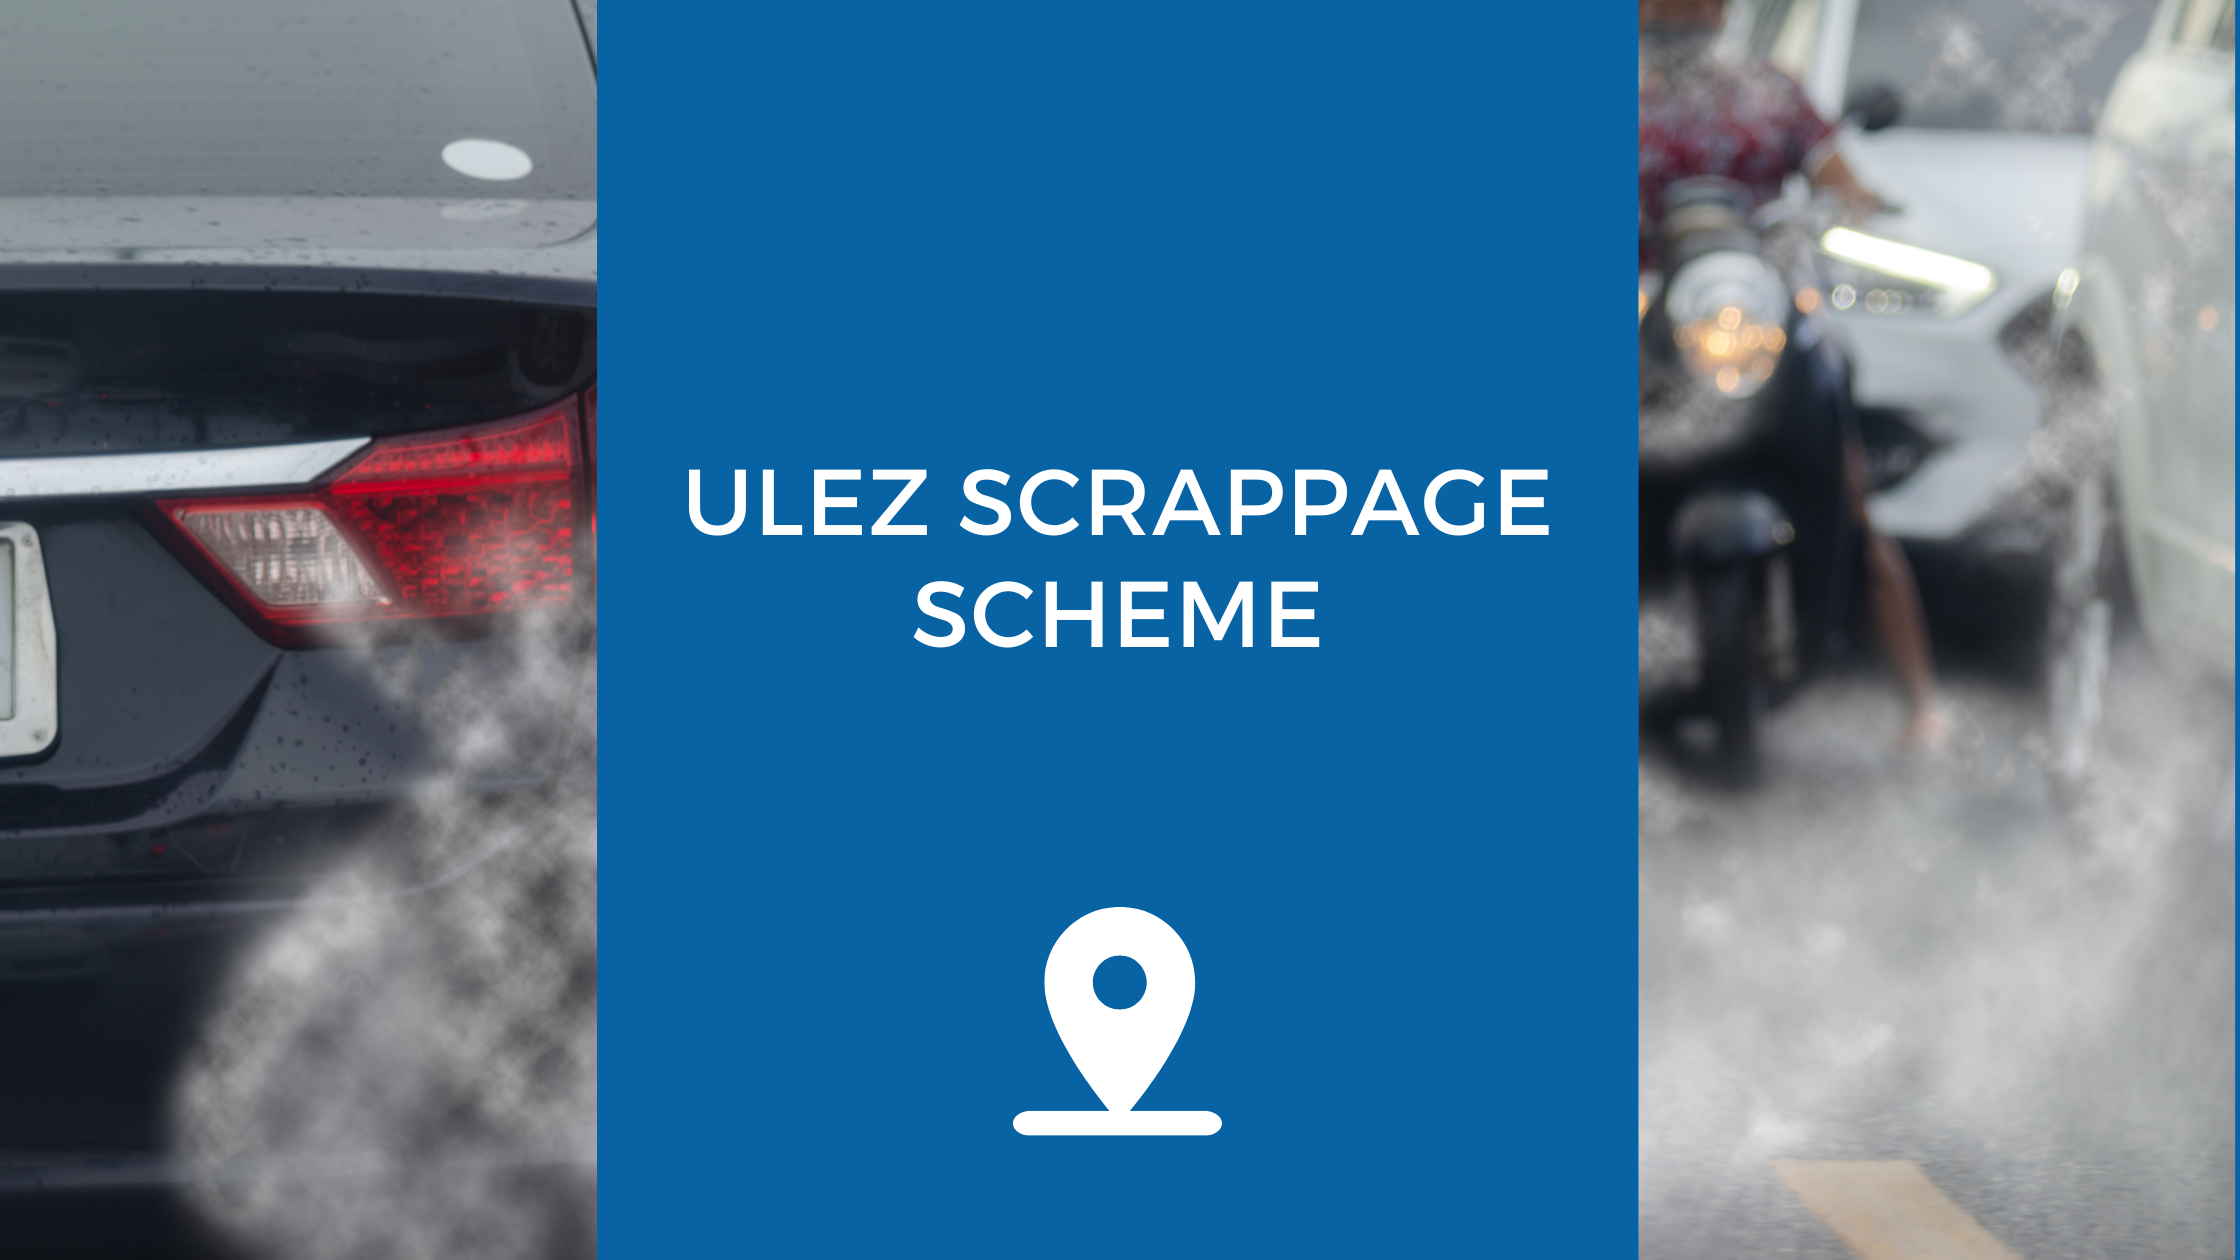 ULEZ Scrappage Scheme for WAVs